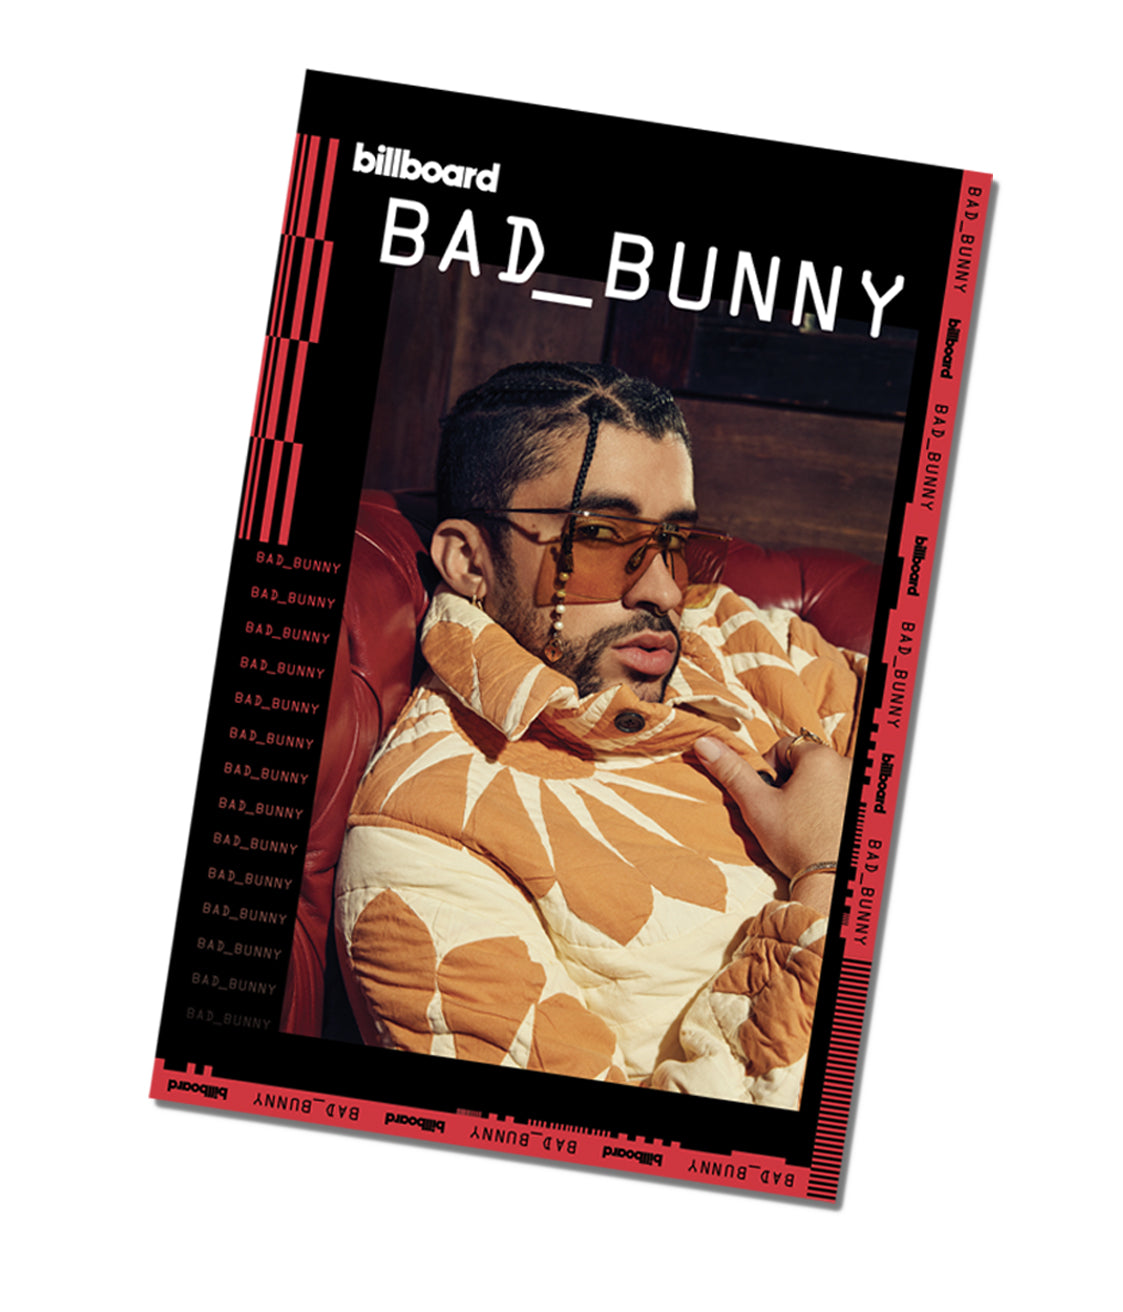 Billboard Collector's Edition Zine Featuring Bad Bunny (Spanish